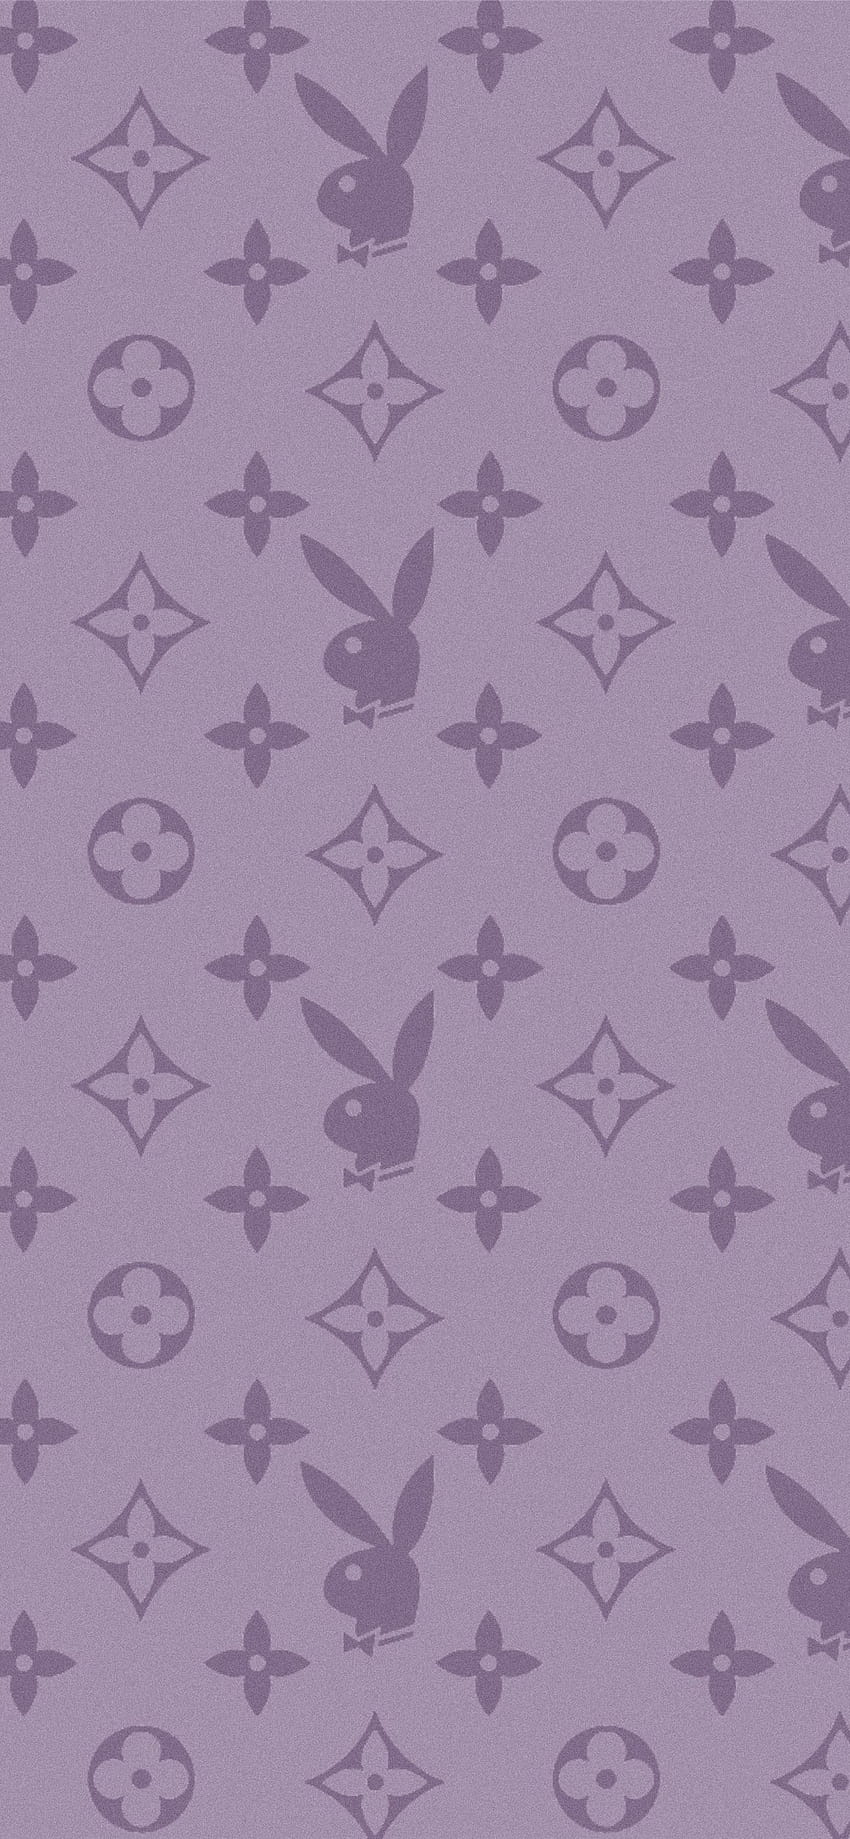 Download wallpapers Louis Vuitton purple logo, 4k, purple neon lights,  creative, purple abstract background, Louis Vuitton logo, fashion brands, Louis  Vuitton for desktop free. Pictures for desktop free